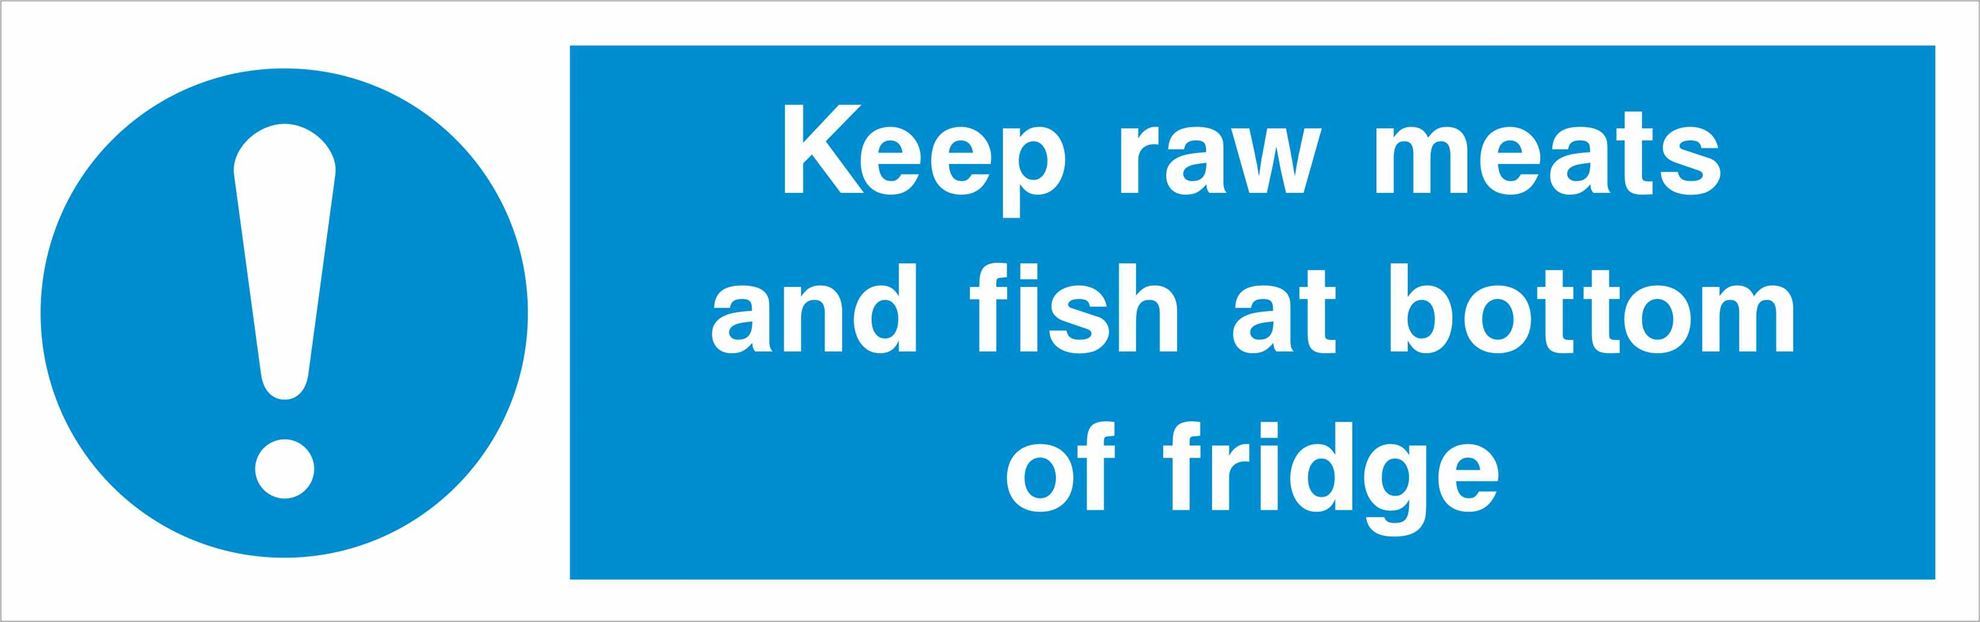 Keep raw meats and fish at bottom of fridge